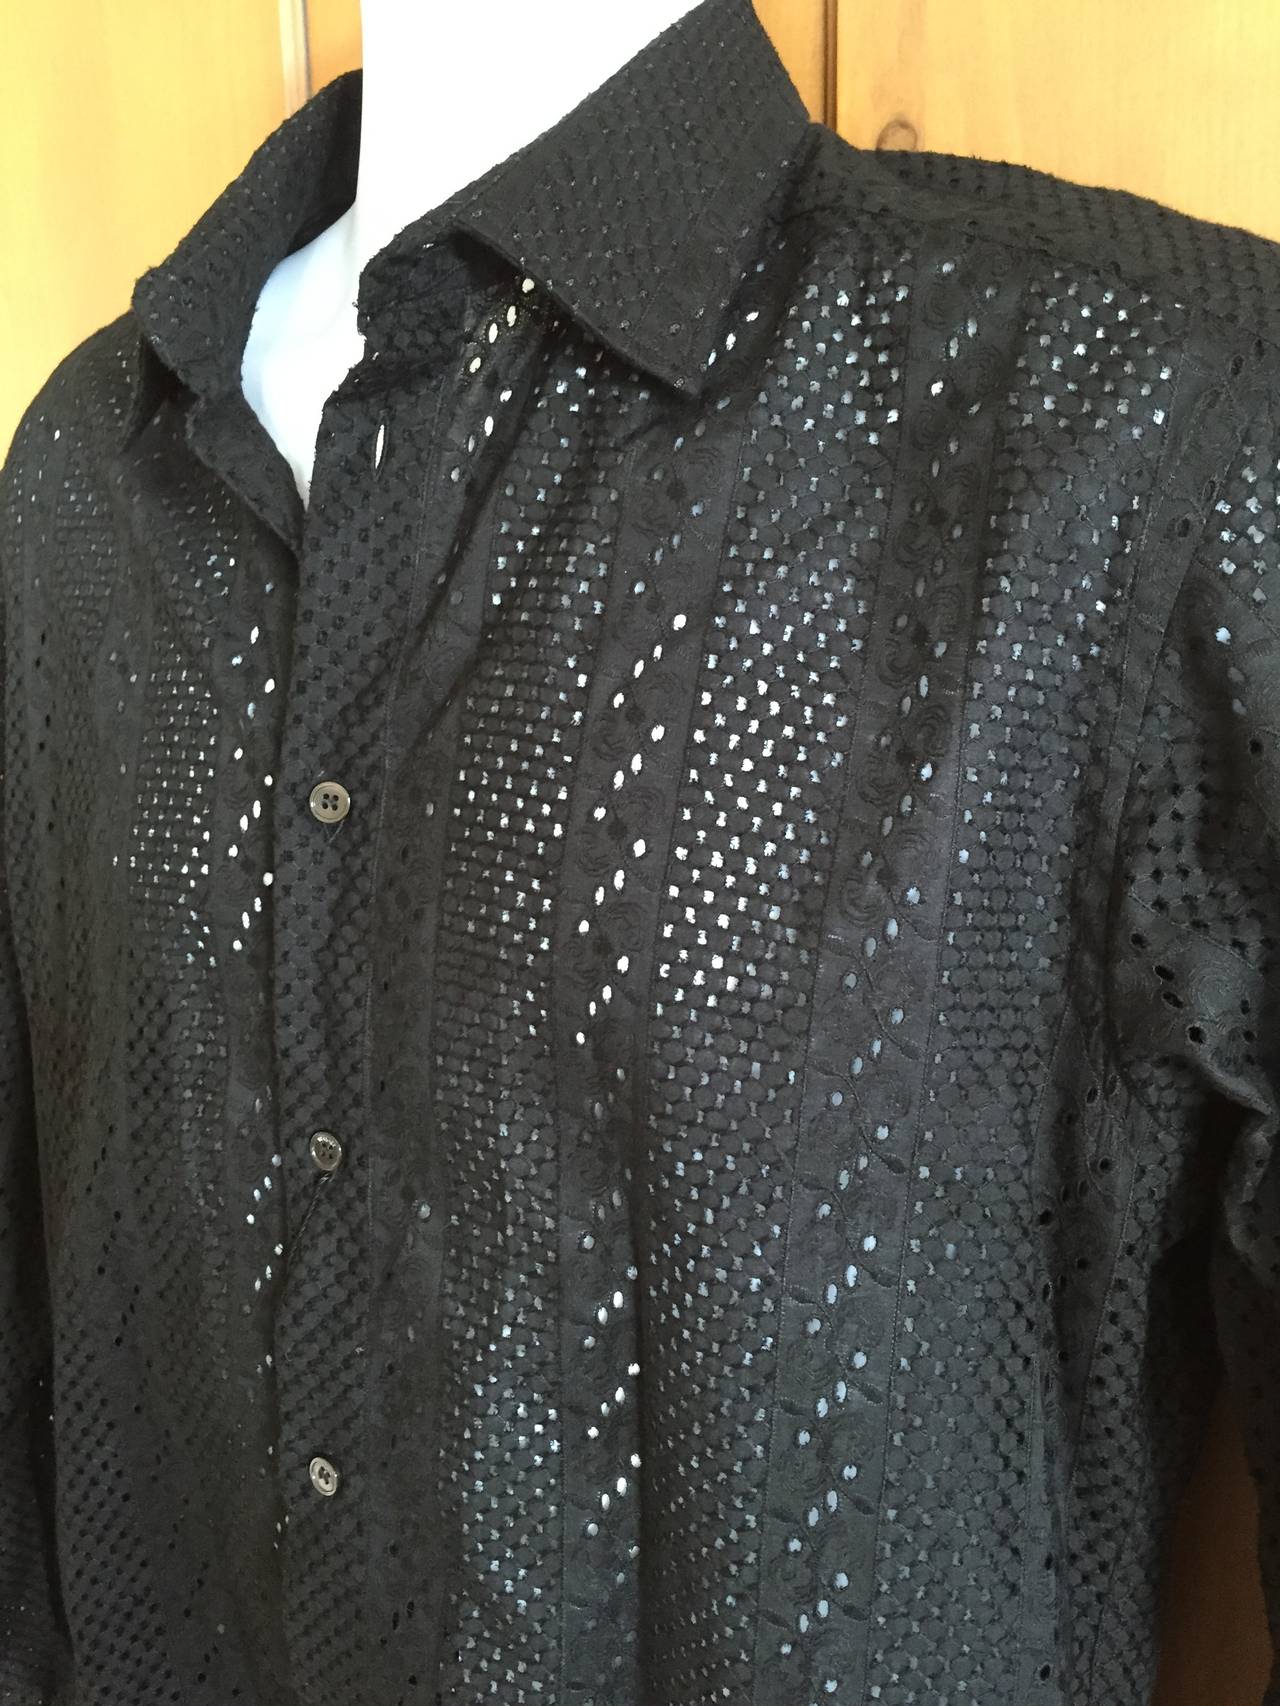 Wonderful vintage 1990 black cotton eyelet shirt.
Deadstock, unworn with tags, sz 50 Eu , 40 US
Measurements;
Chest 45